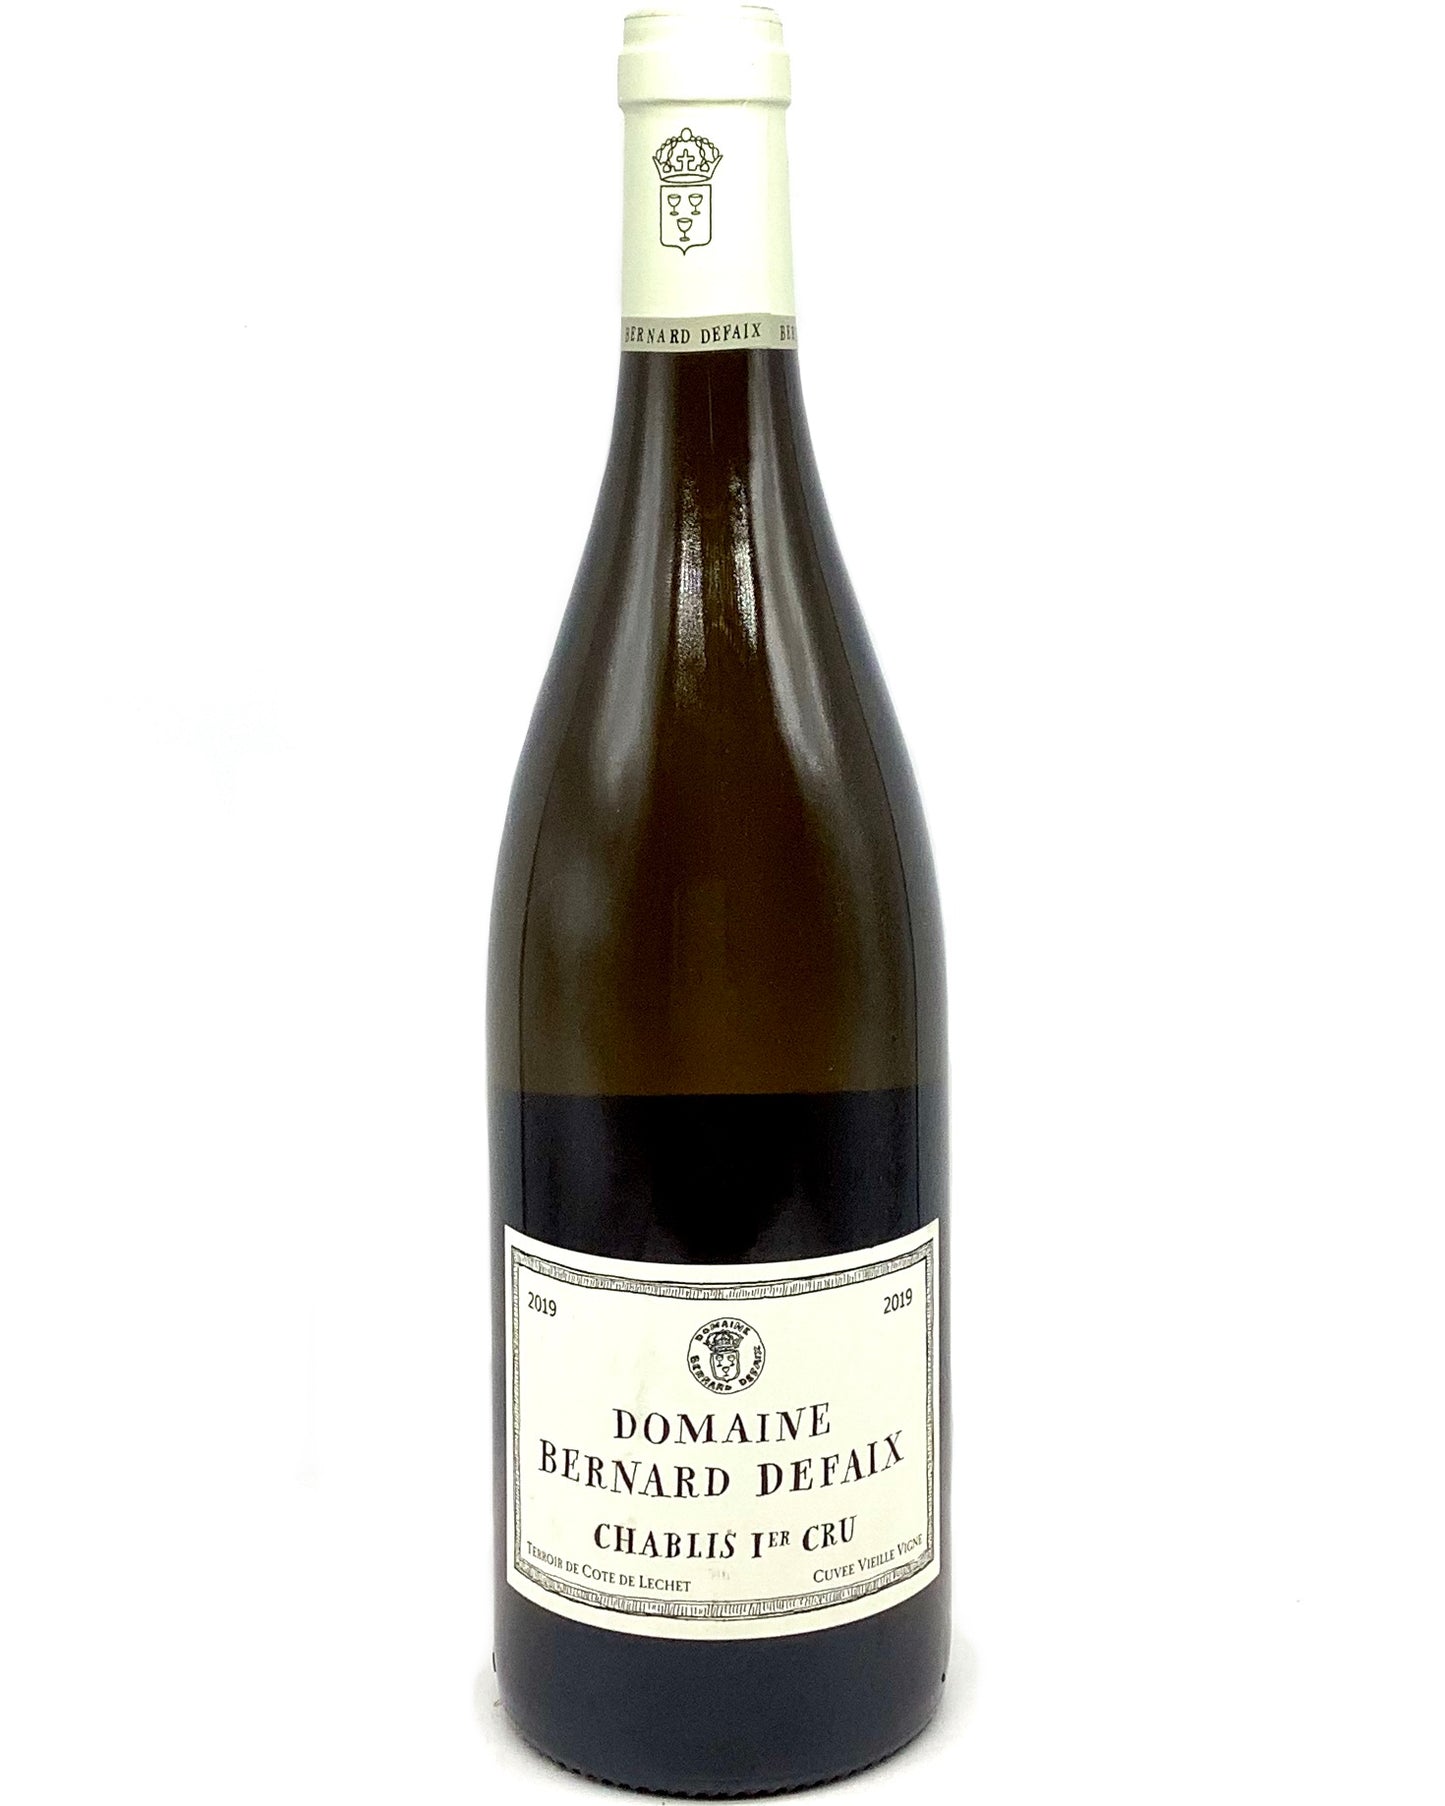 Bernard Defaix, Chardonnay, Chablis Grand Cru Bougros, Burgundy, France 2013